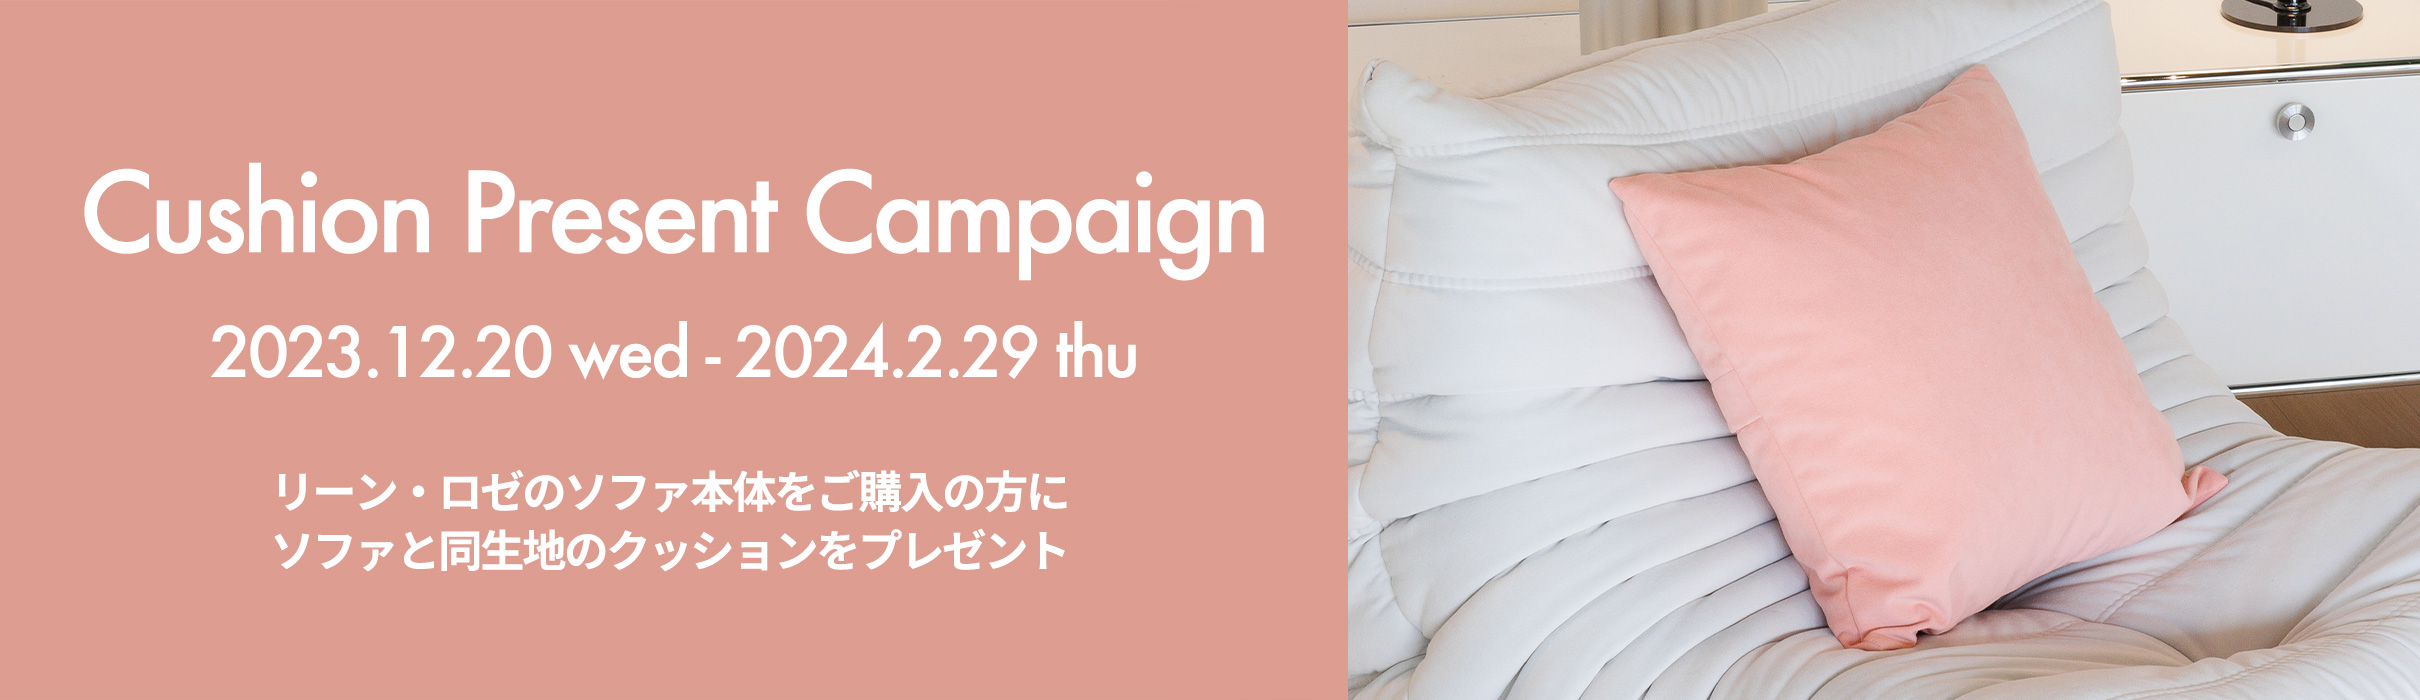 Cushion Present Campaign アトラクト クッション プレゼントキャンペーン